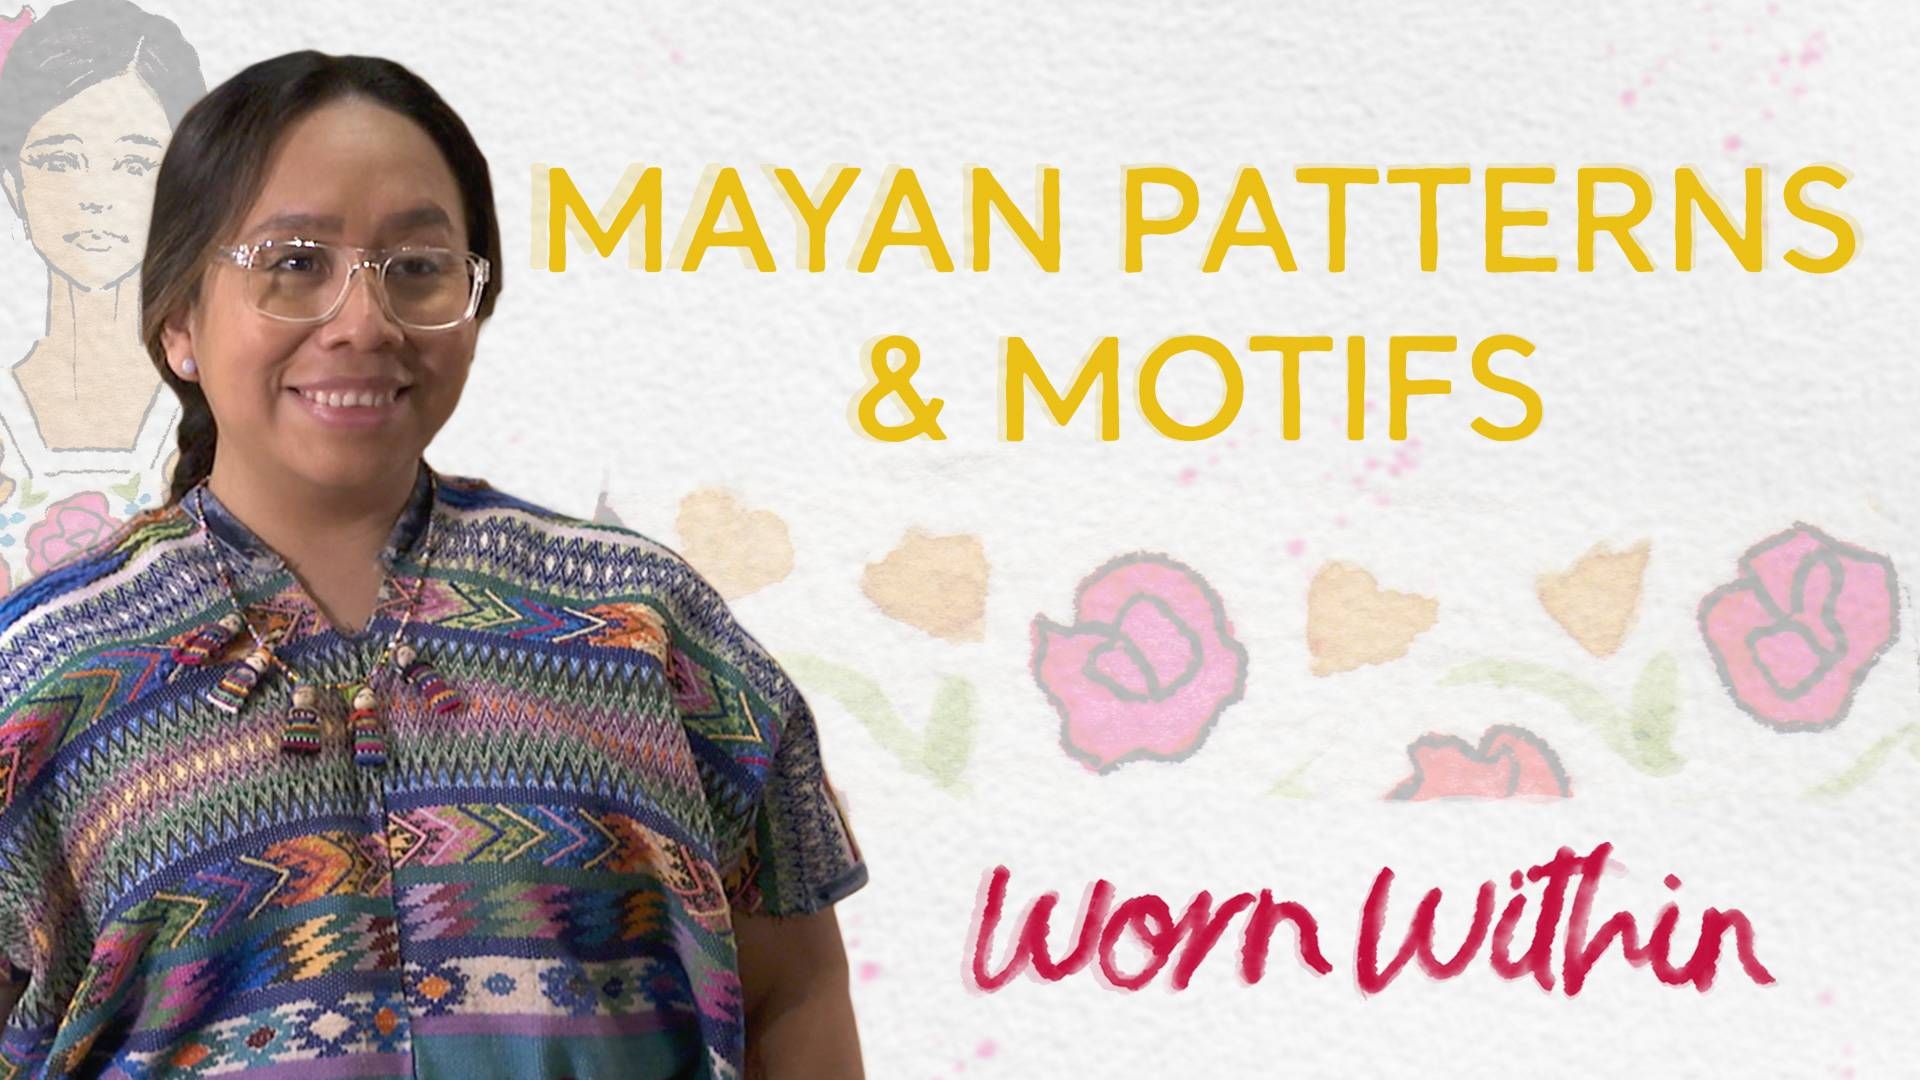 Worn Within: Did Mayan weaving patterns originate in Spain?